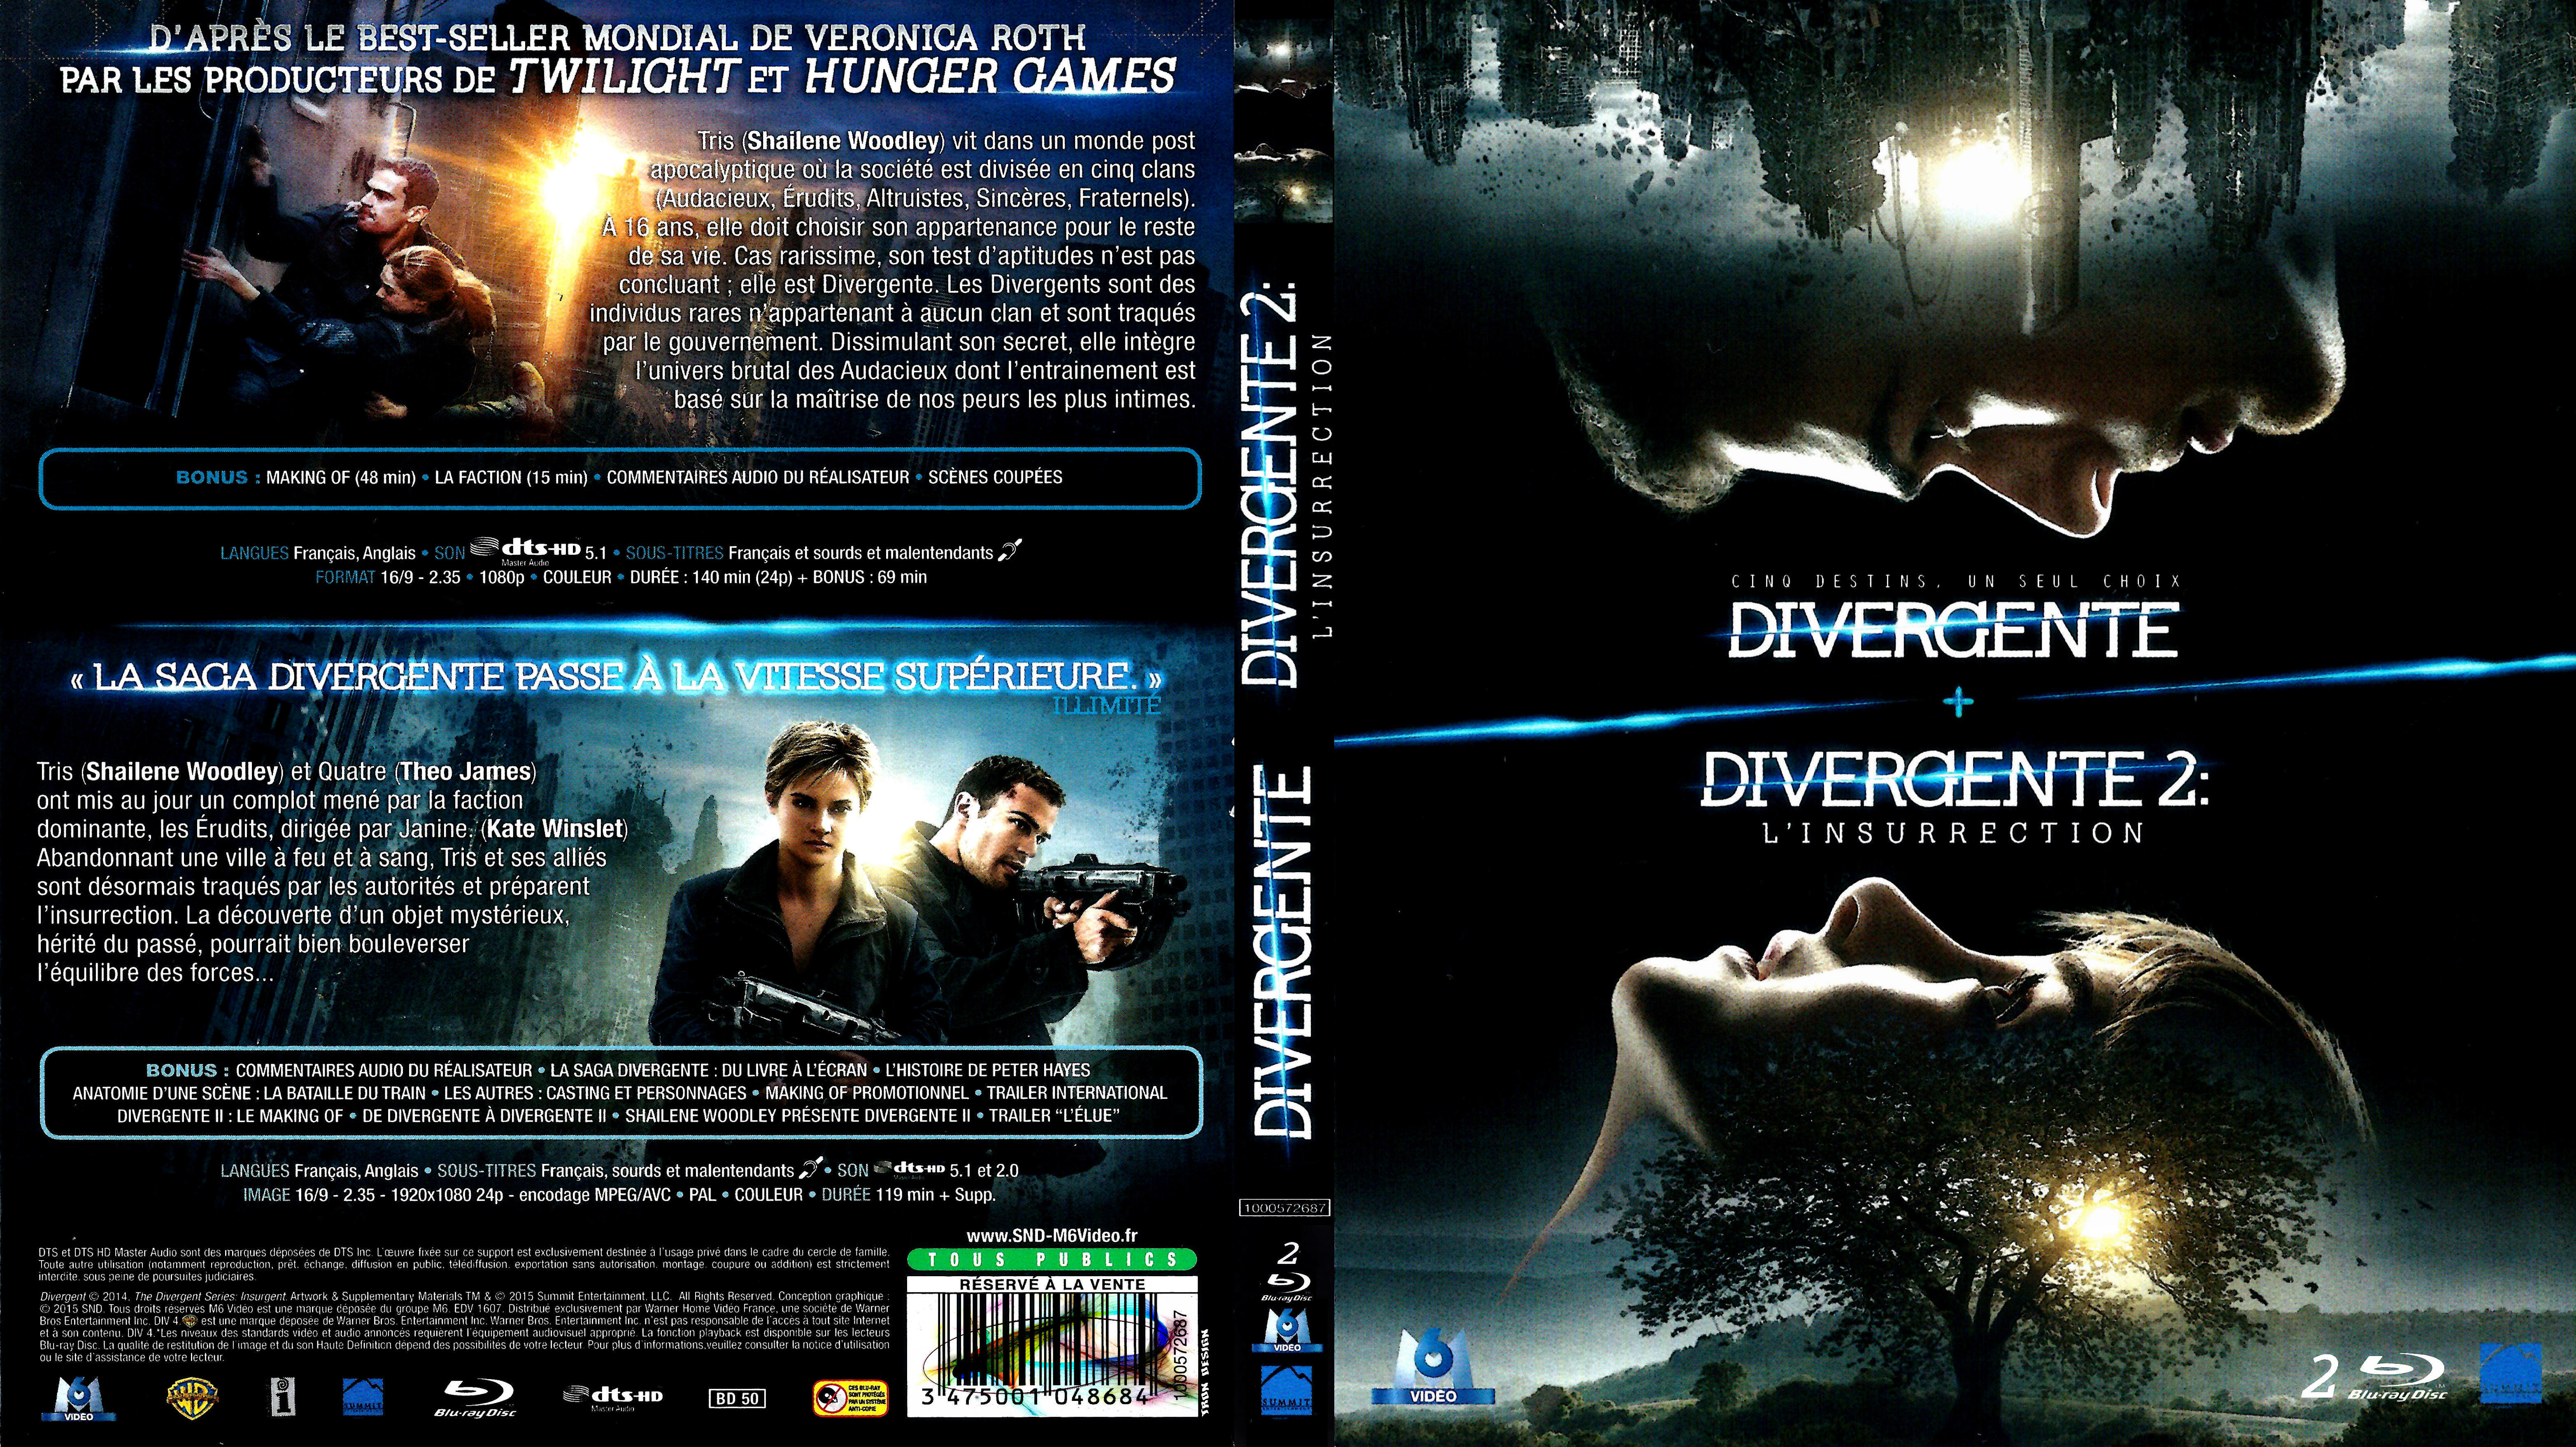 Jaquette DVD Divergente 1 & 2 custom (BLU-RAY)